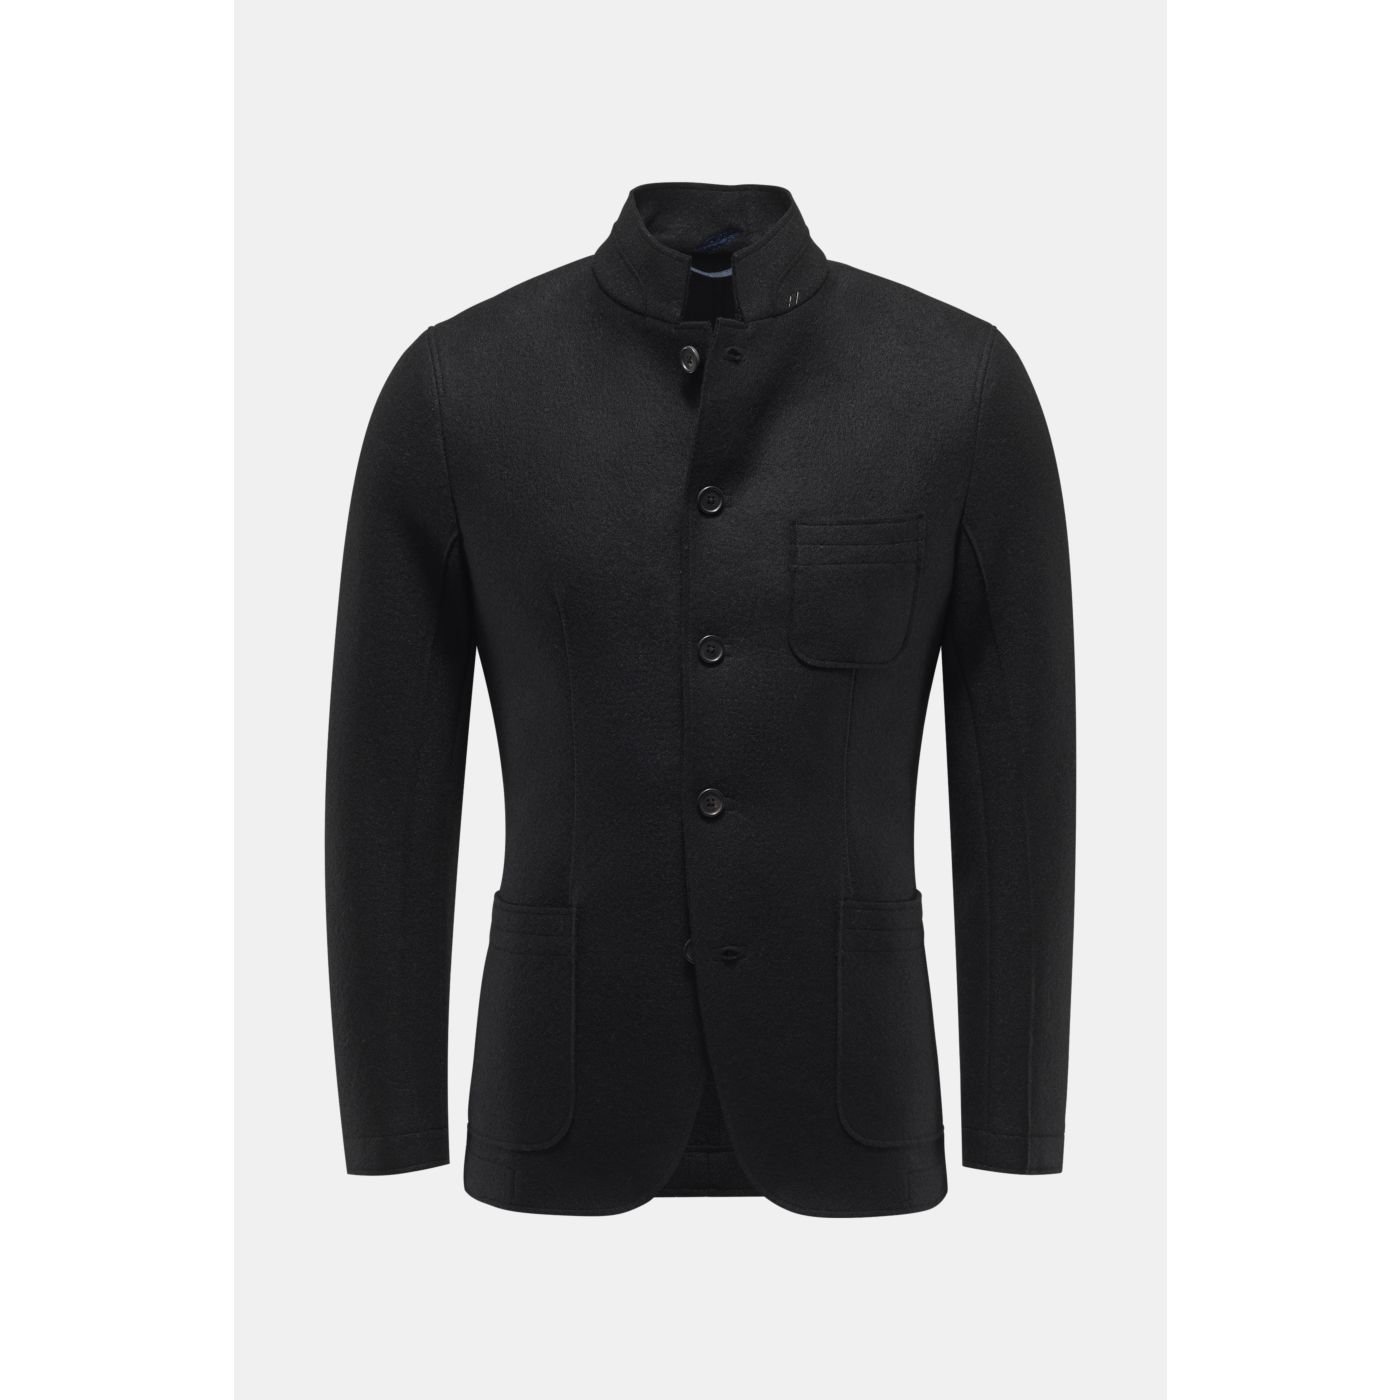 WEBER + WEBER smart-casual jacket 'Travel Blazer' black | BRAUN Hamburg